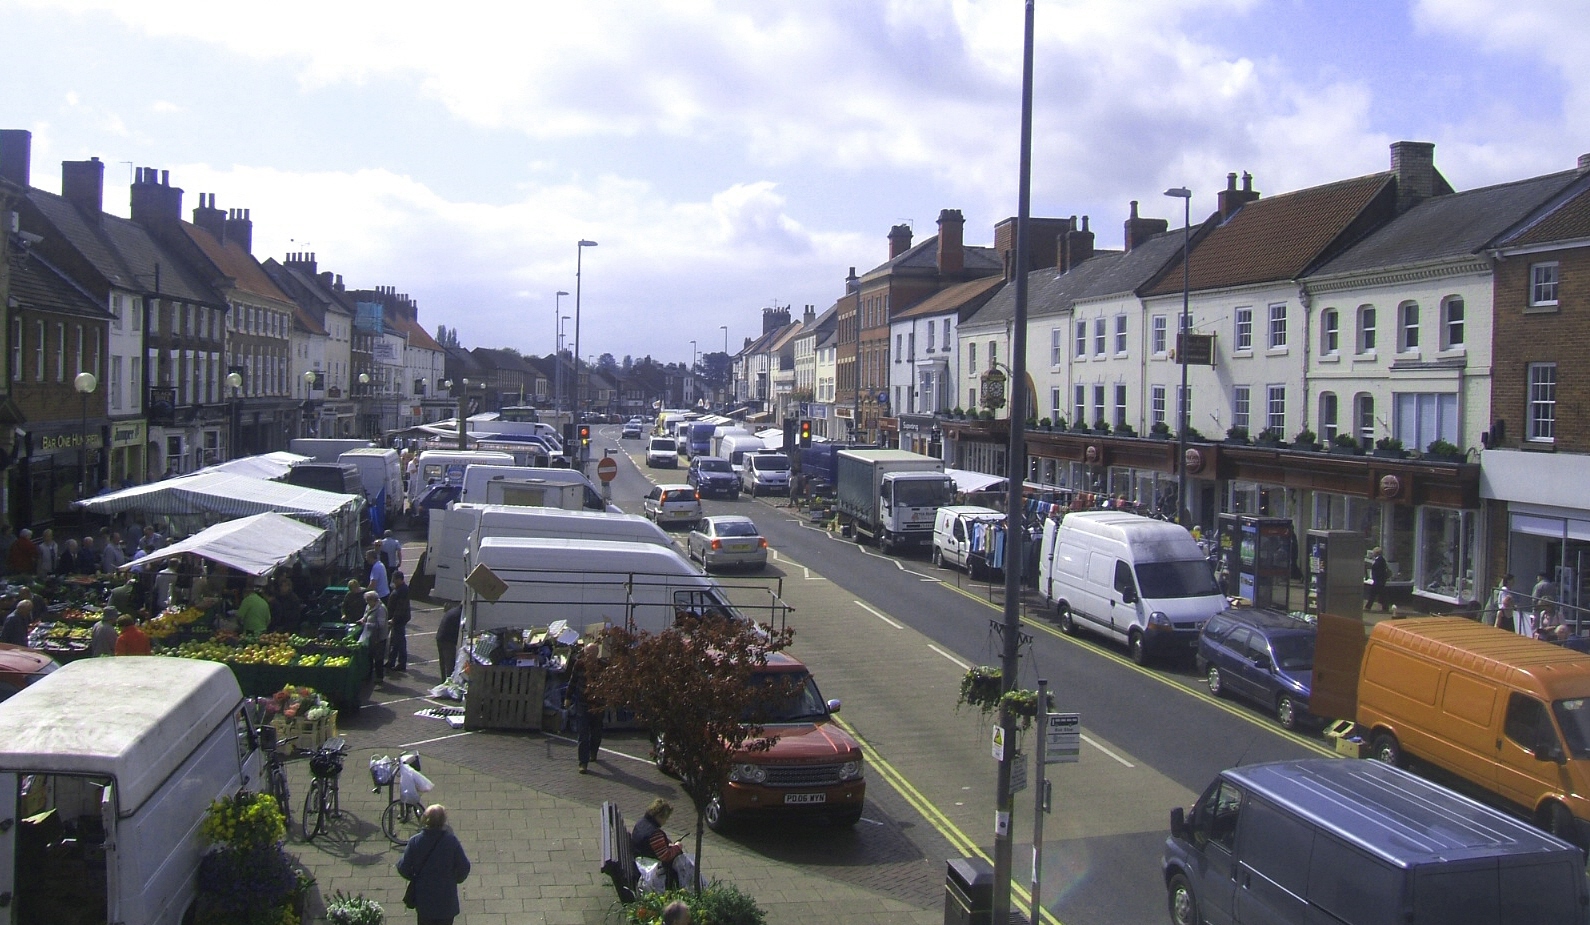 Northallerton on a market day